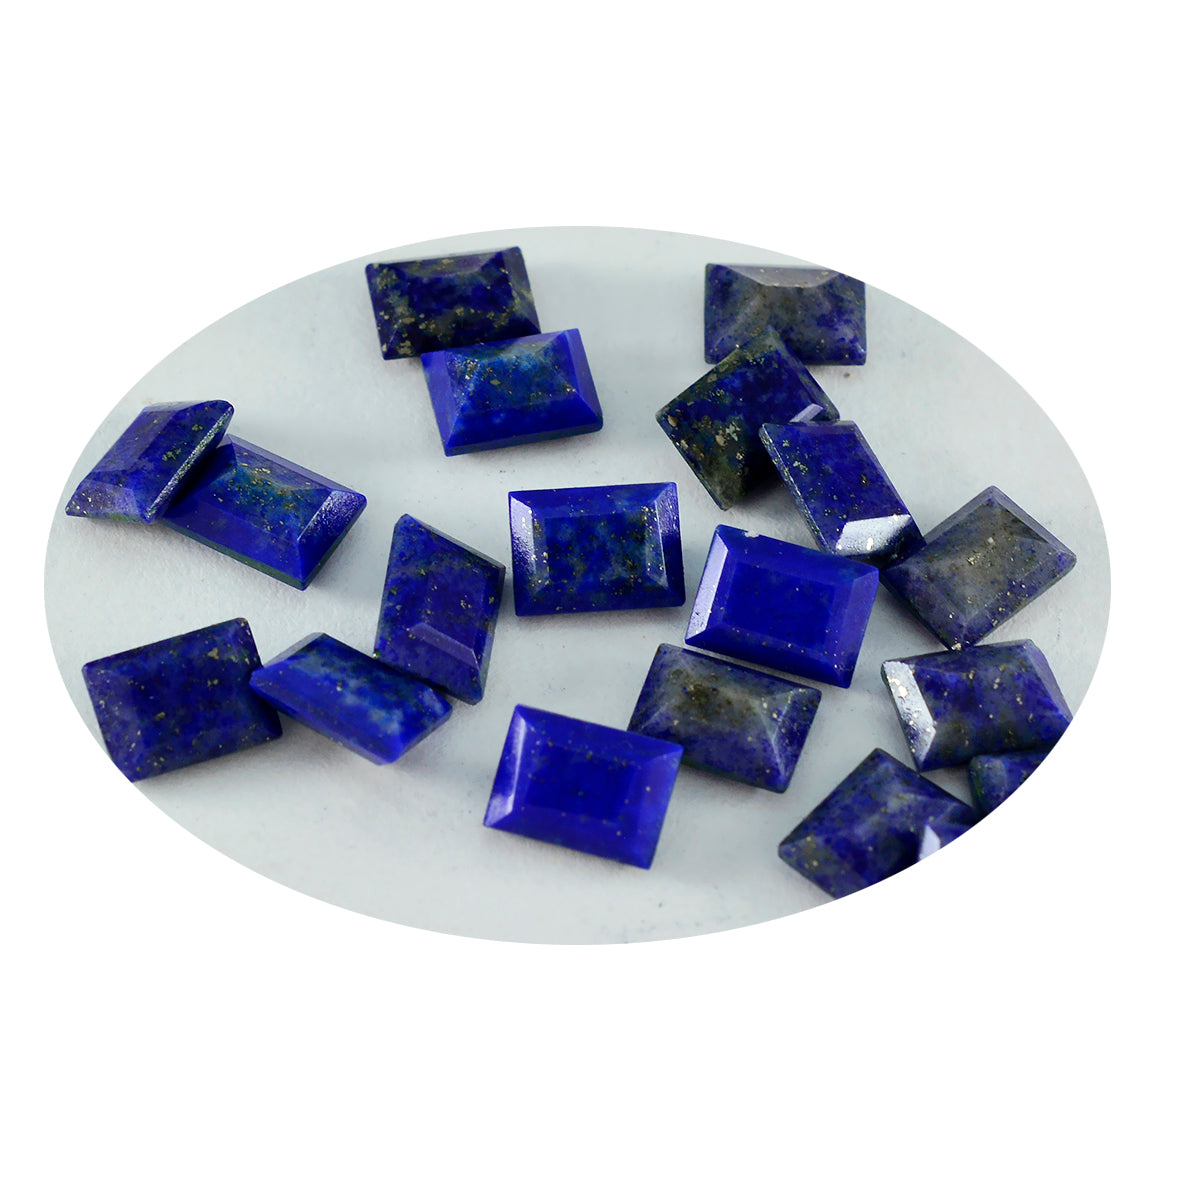 Riyogems 1PC Genuine Blue Lapis Lazuli Faceted 5x7 mm Octagon Shape attractive Quality Stone